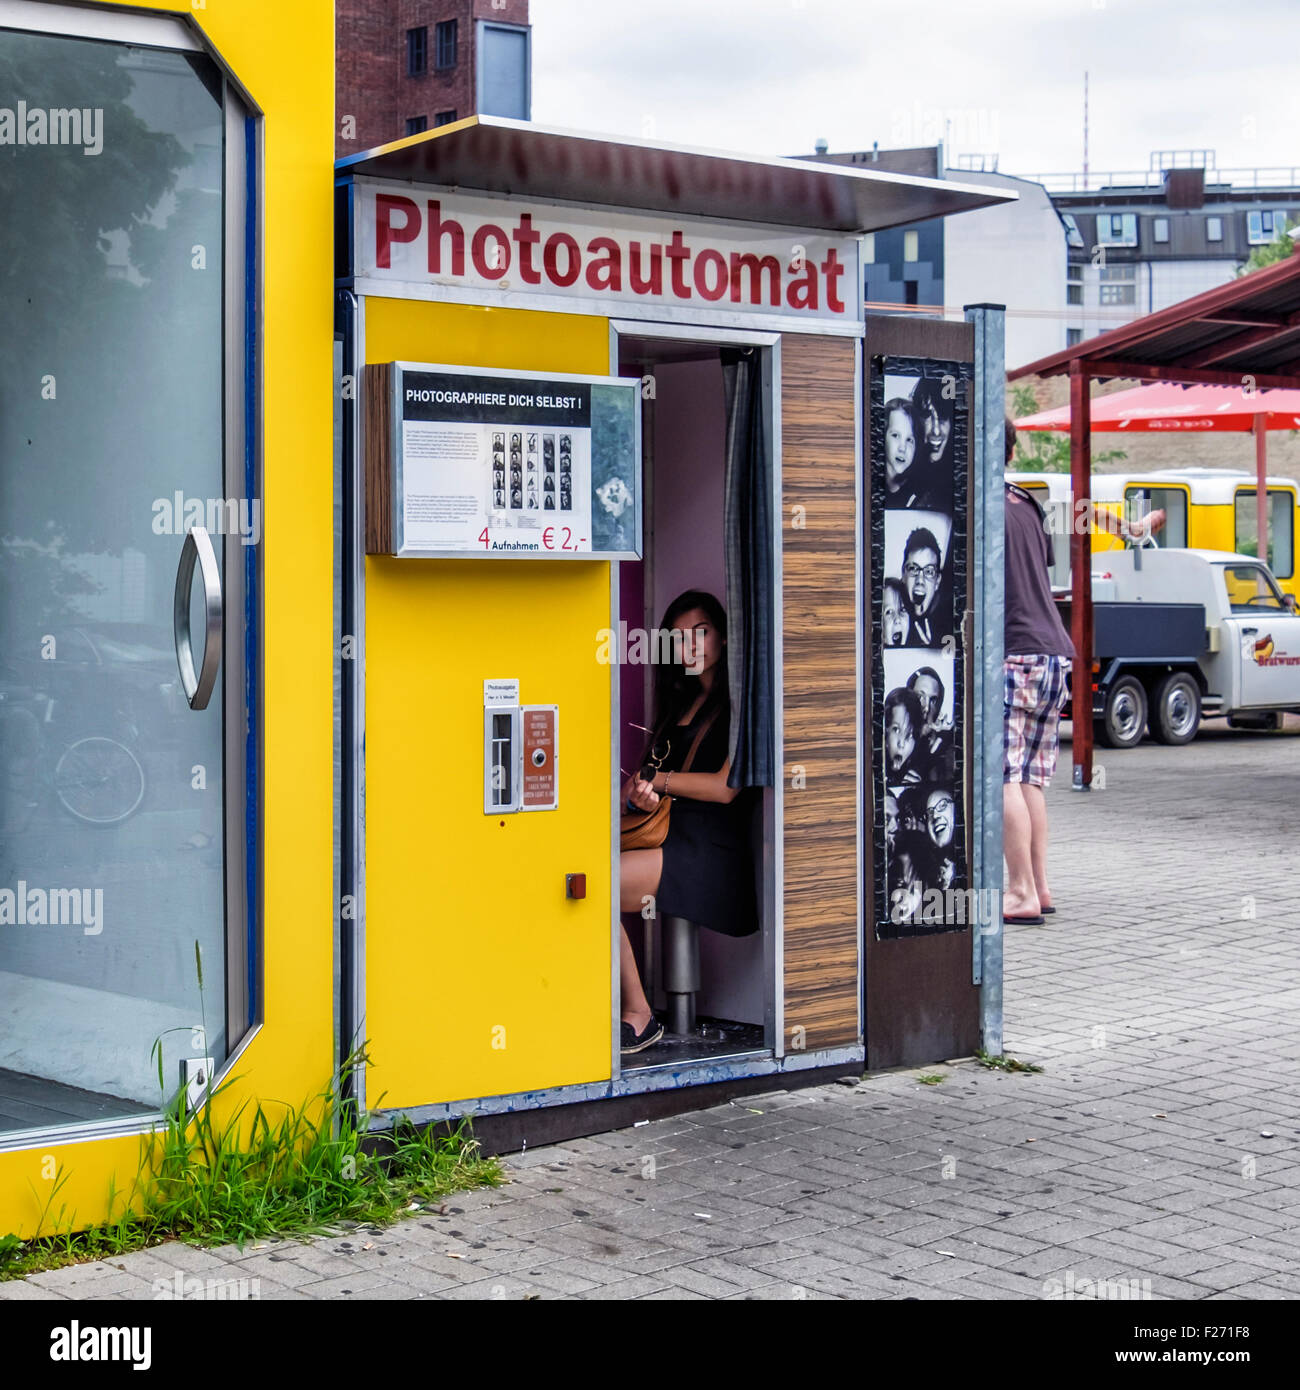 Berlin-Touristen Attraktion, Photoautomat, junge Frau in Photo Booth nehmen Foto Stockfoto